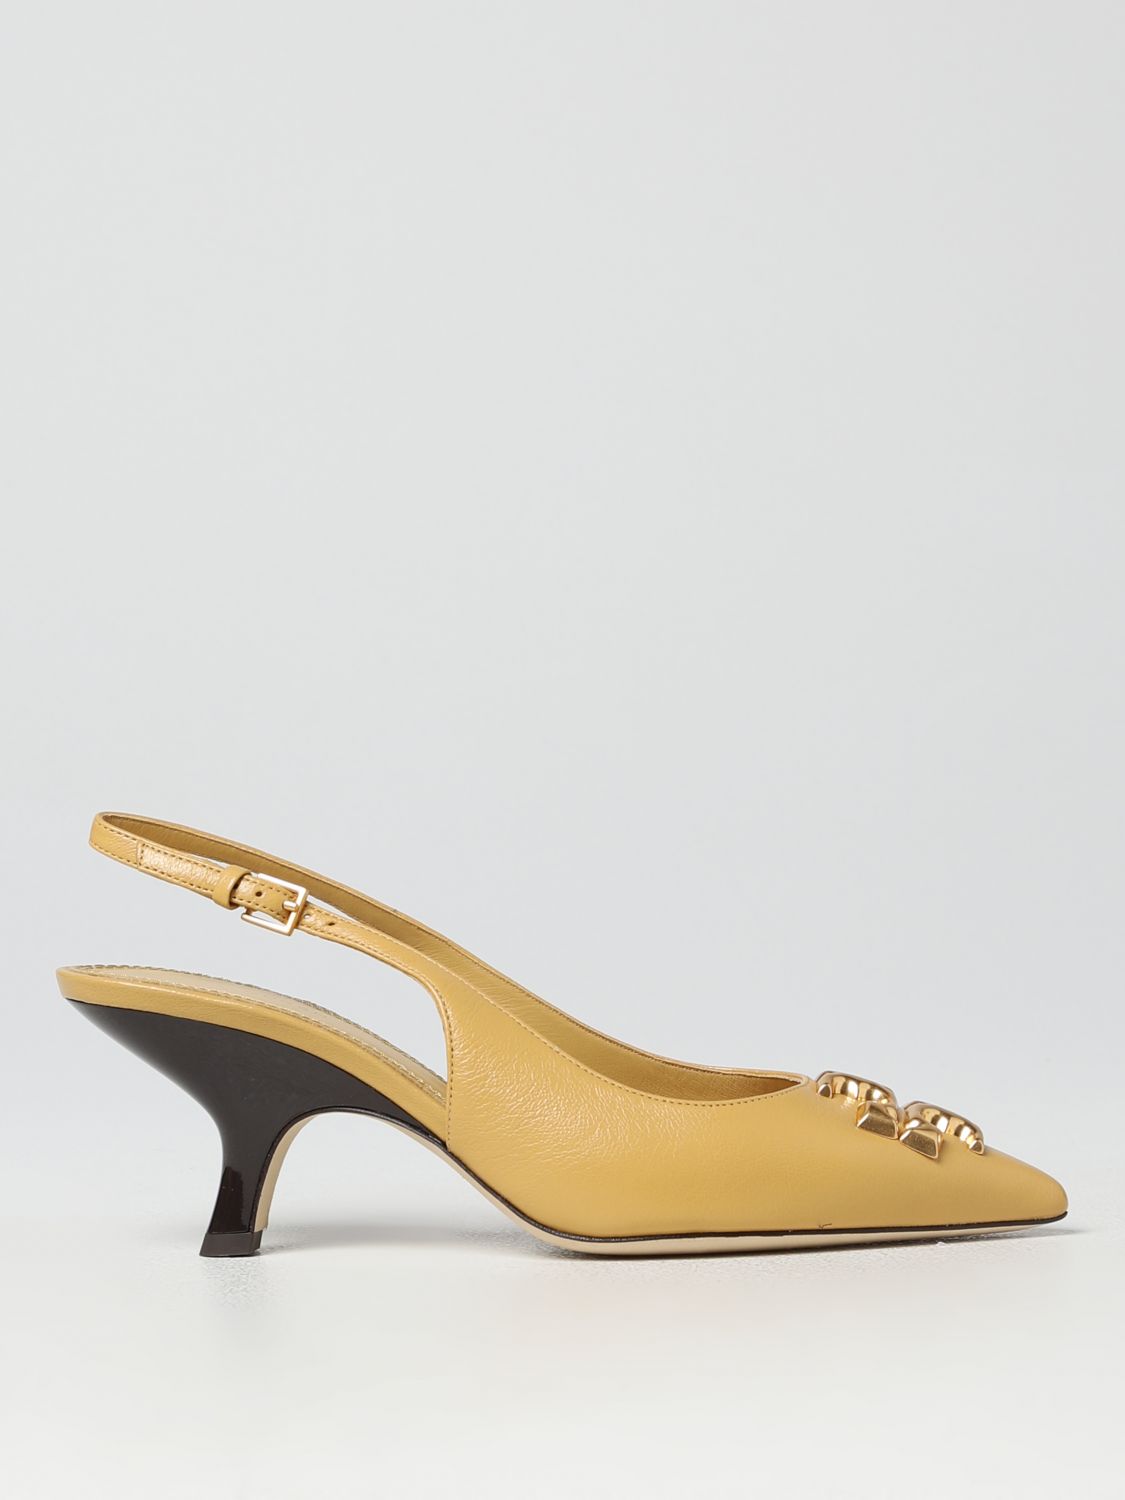 TORY BURCH: high heel shoes for woman - Sand | Tory Burch high heel ...